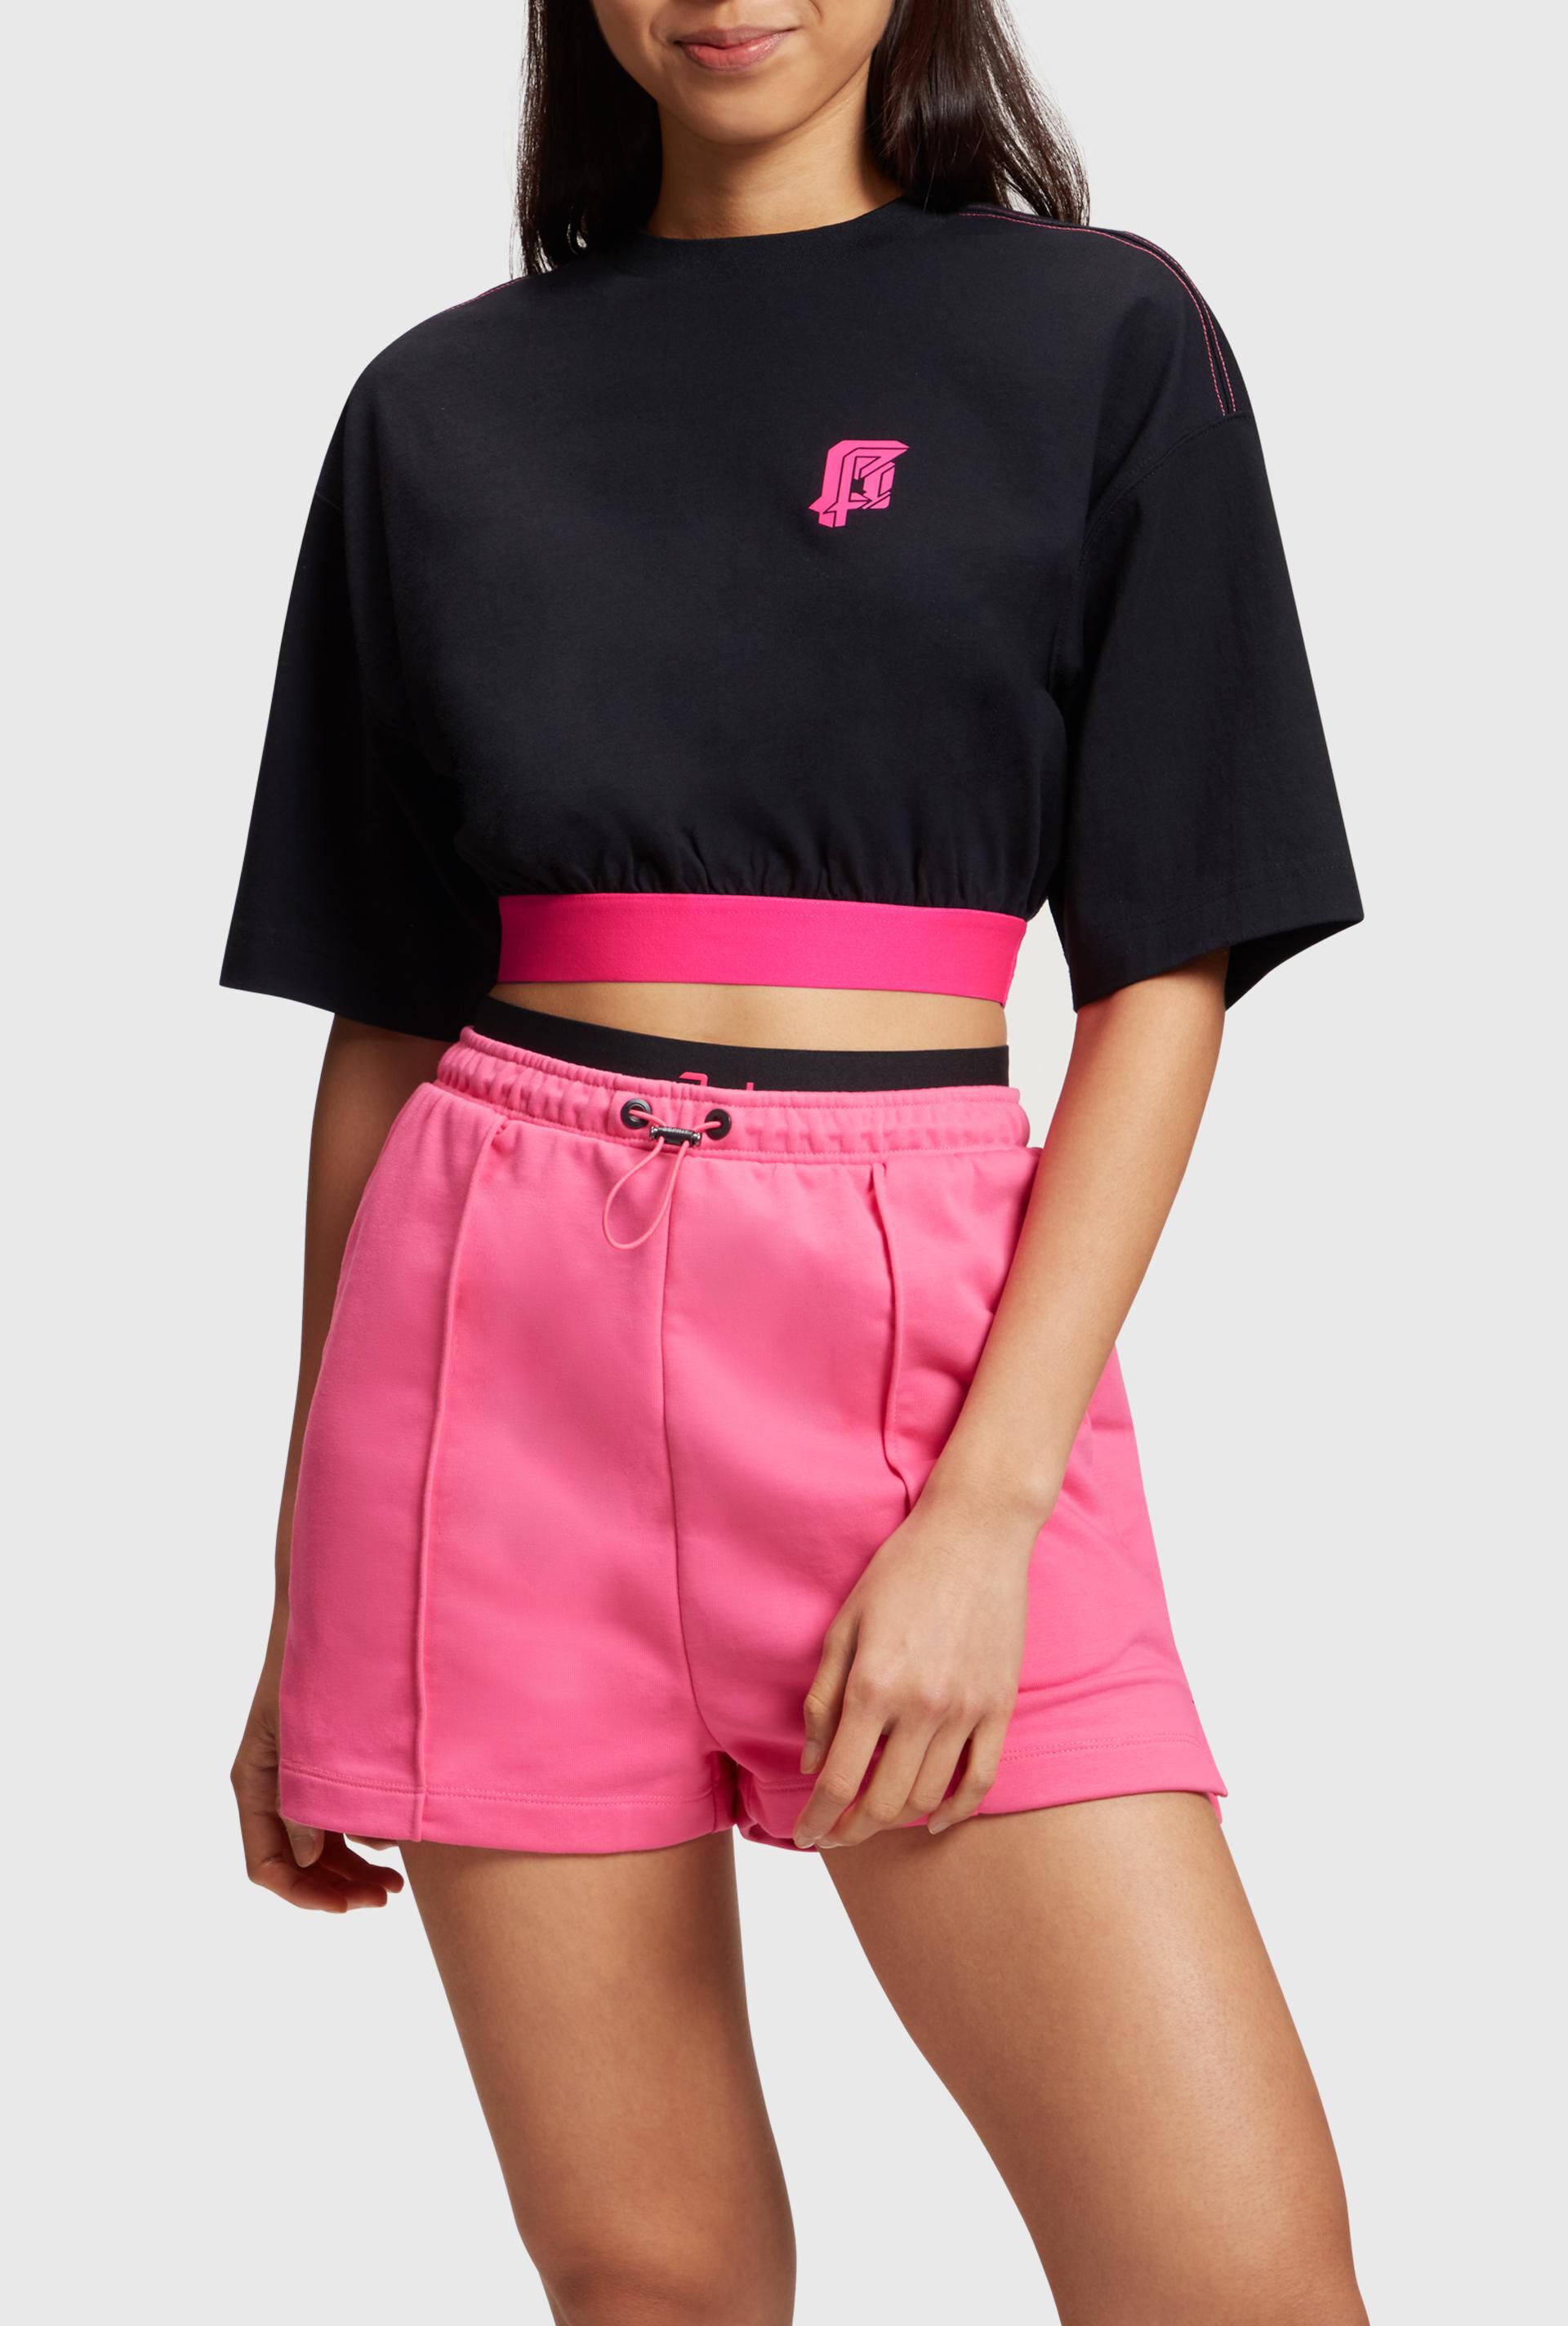 Damen Bekleidung Oberteile Ärmellose Tops Balmain Baumwolle Top mit Logo-Print in Pink 